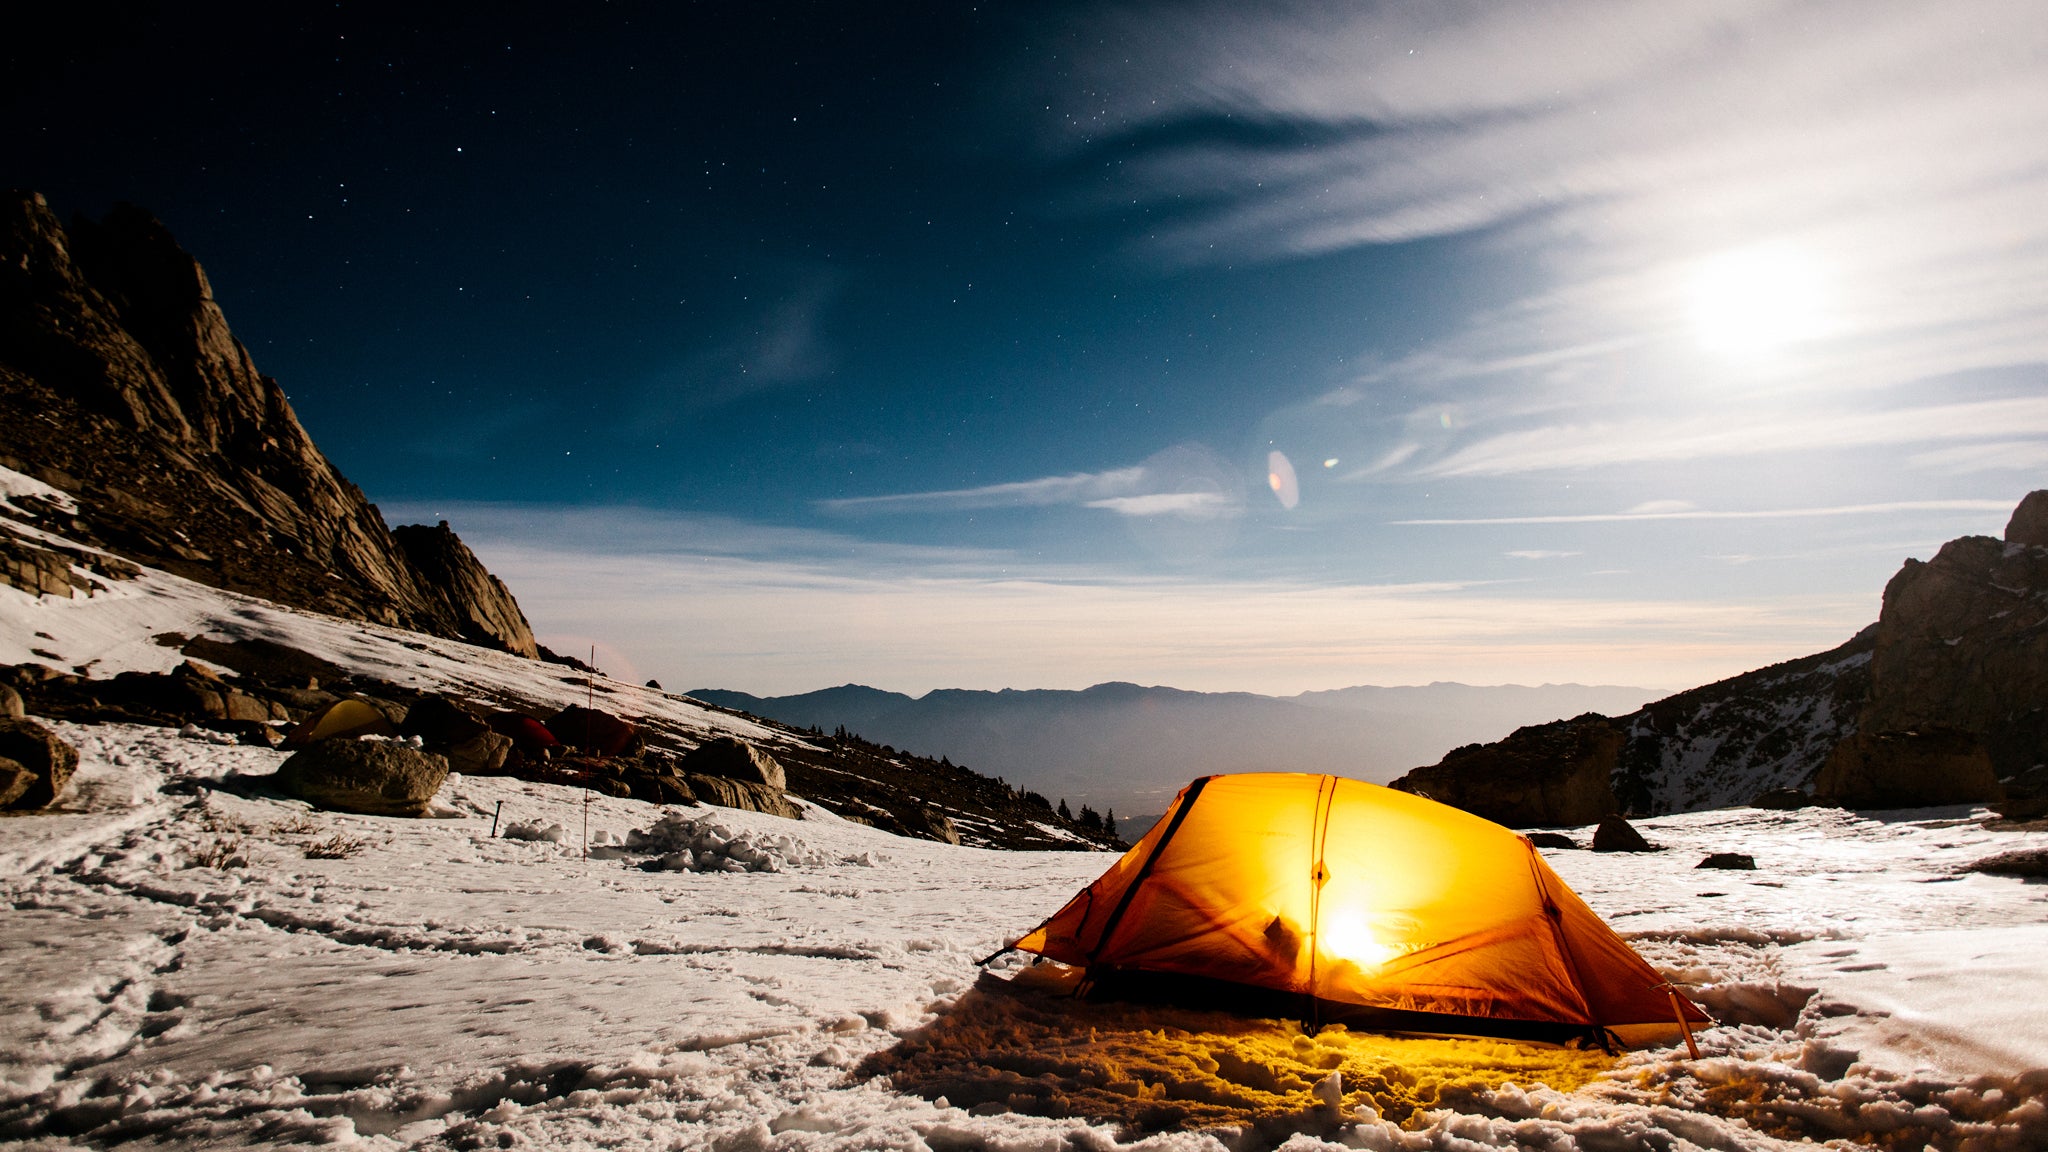 Only camping. Camping Scene. Горизонтальное фото о природе горы с палатками. Travelling Tent. Tents use.